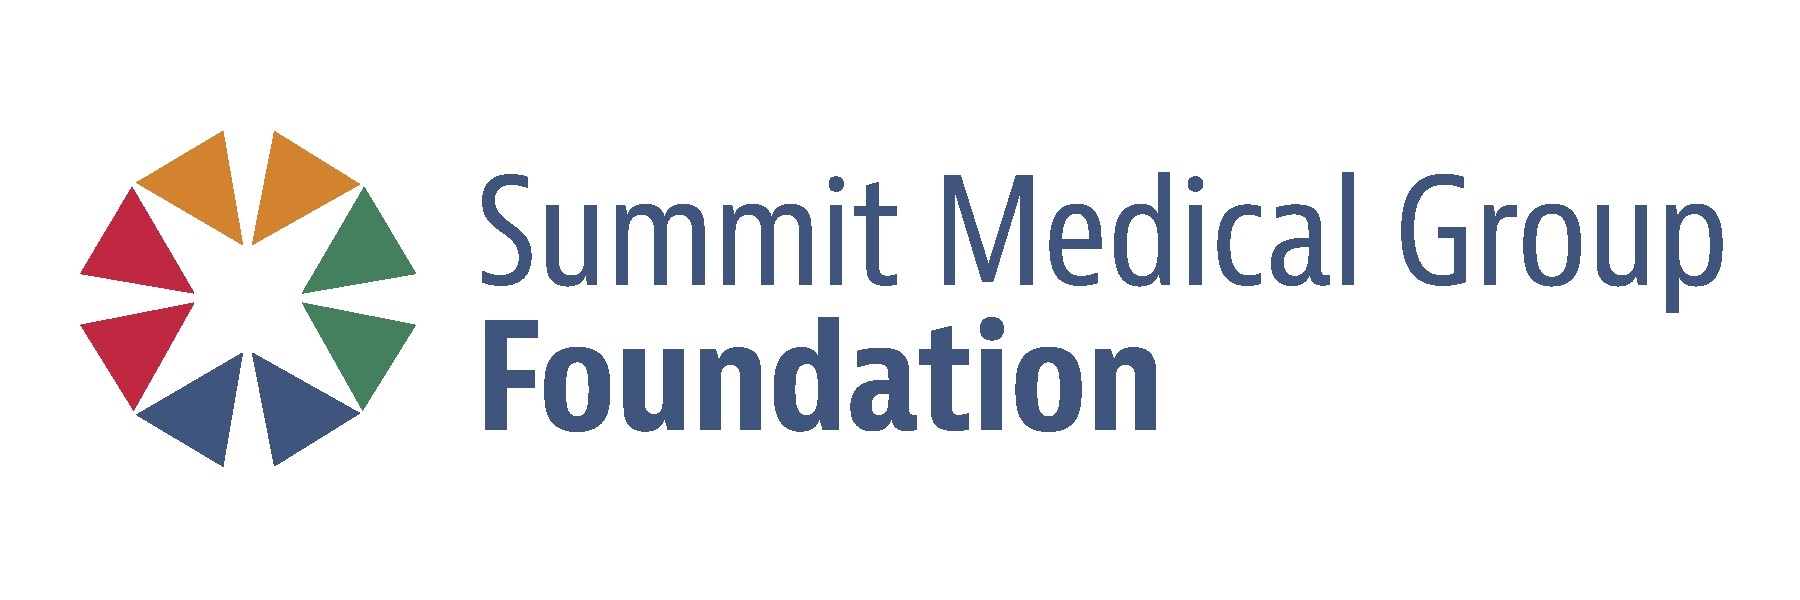 Summit Medical Group Foundation